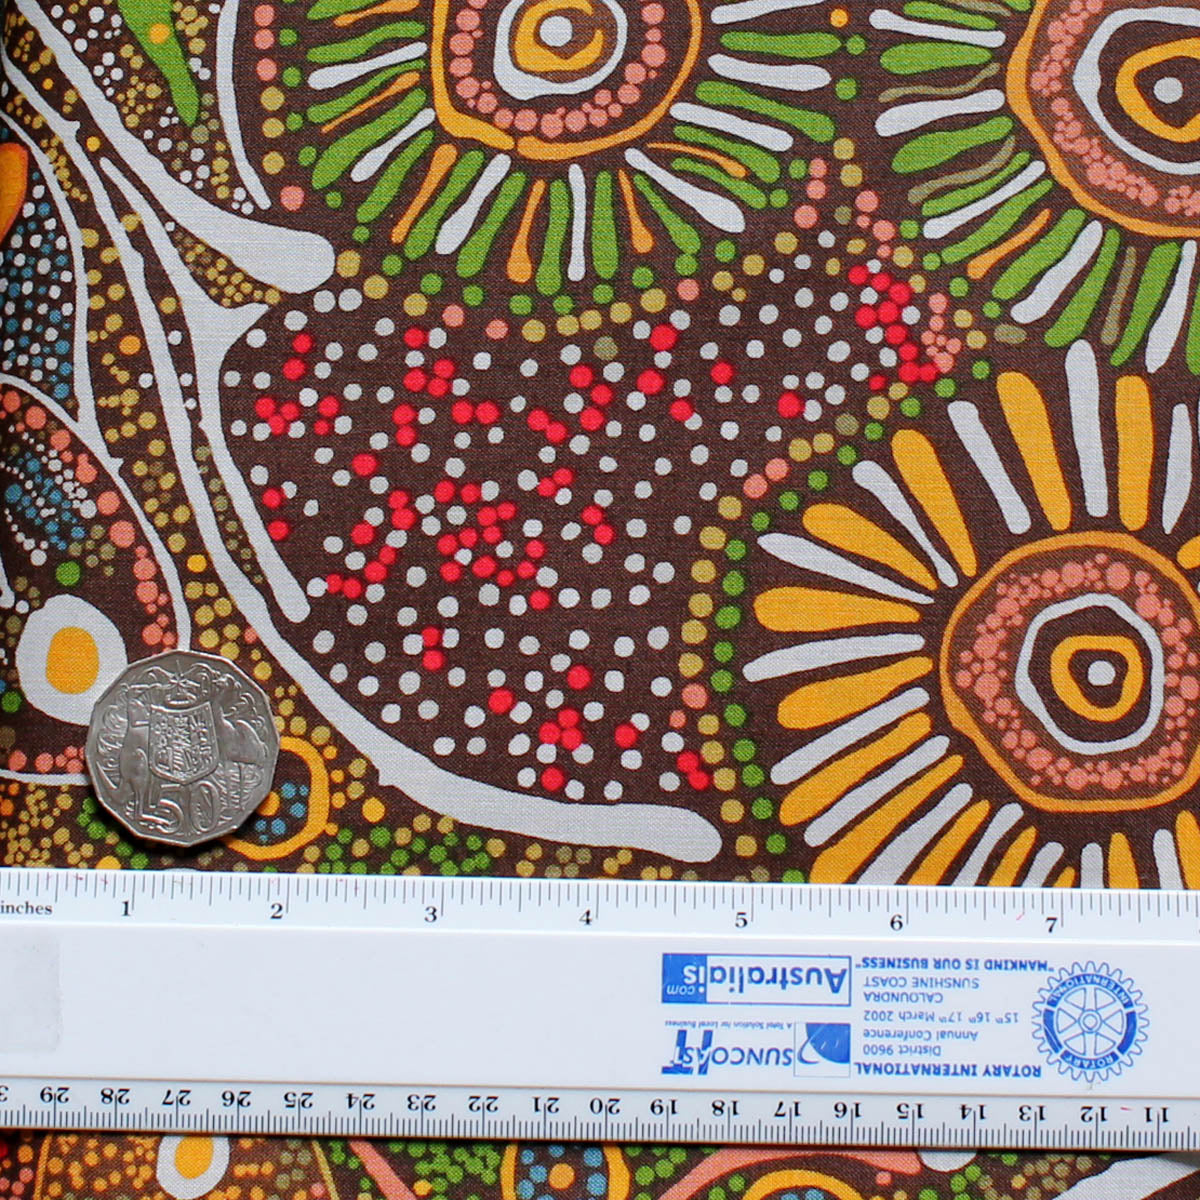 BUSH TUCKER AFTER RAIN GREEN by Aboriginal Artist MARLENE DOOLAN